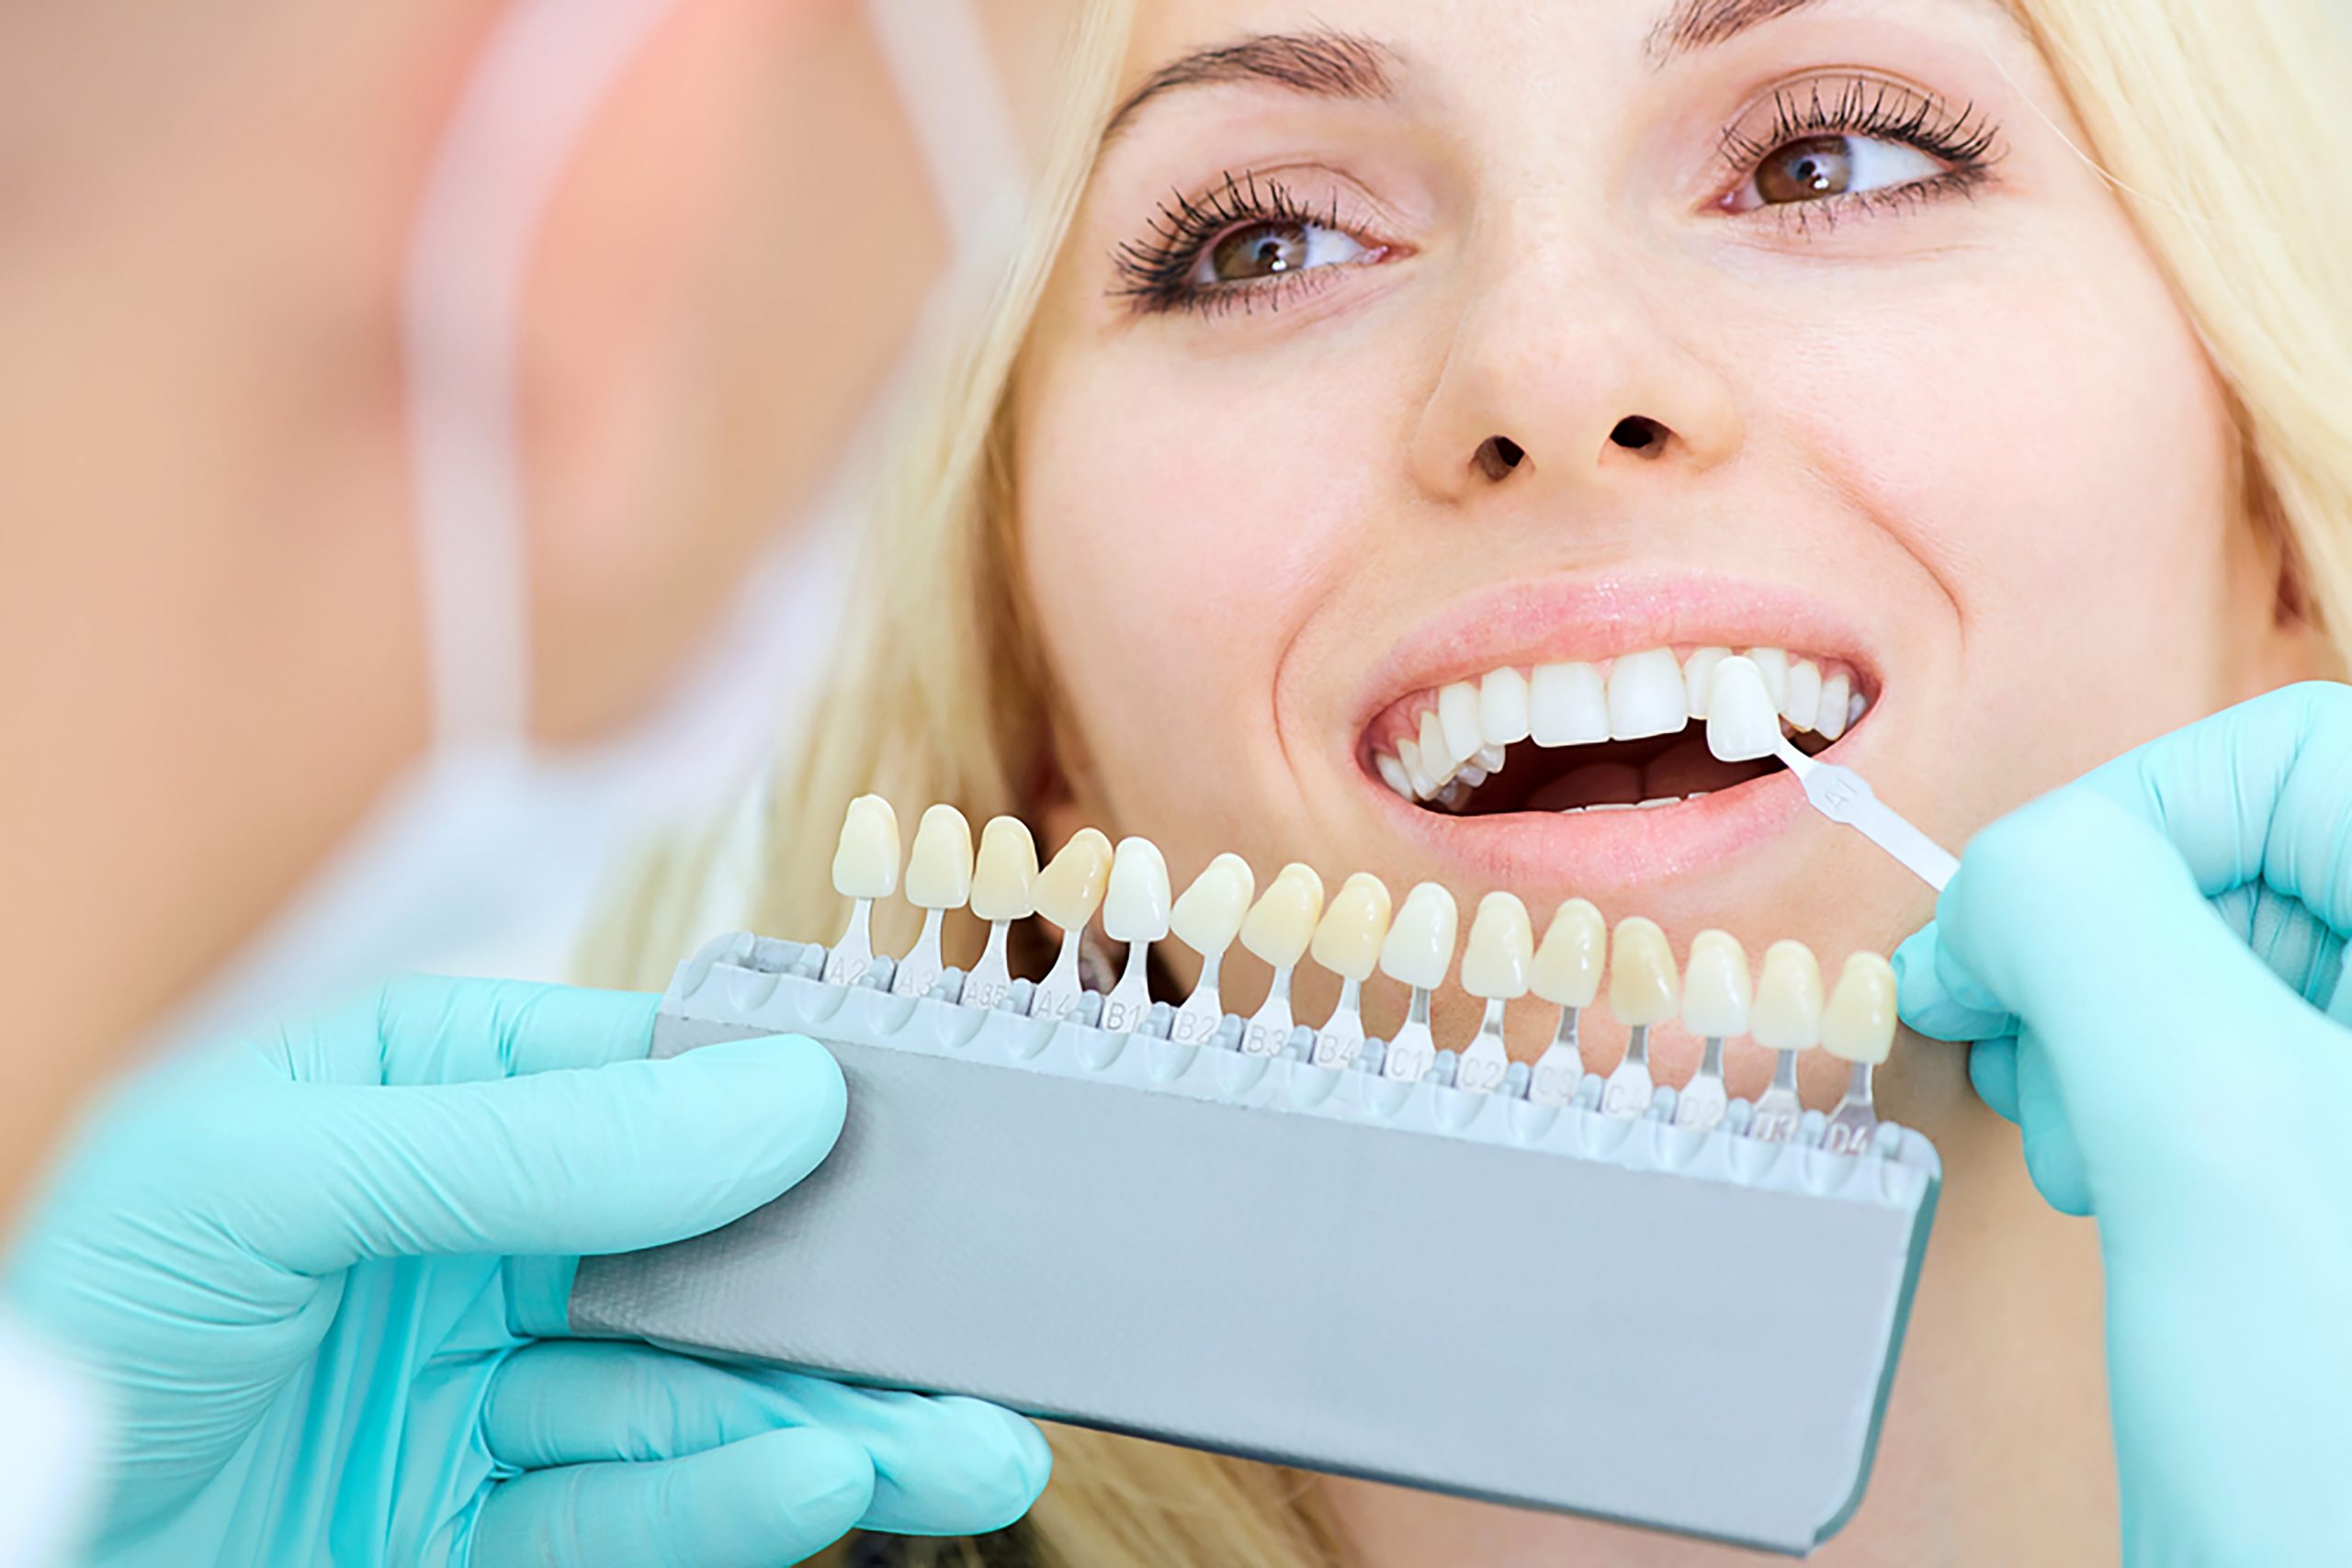 Whitening teeth Teeth Whitening